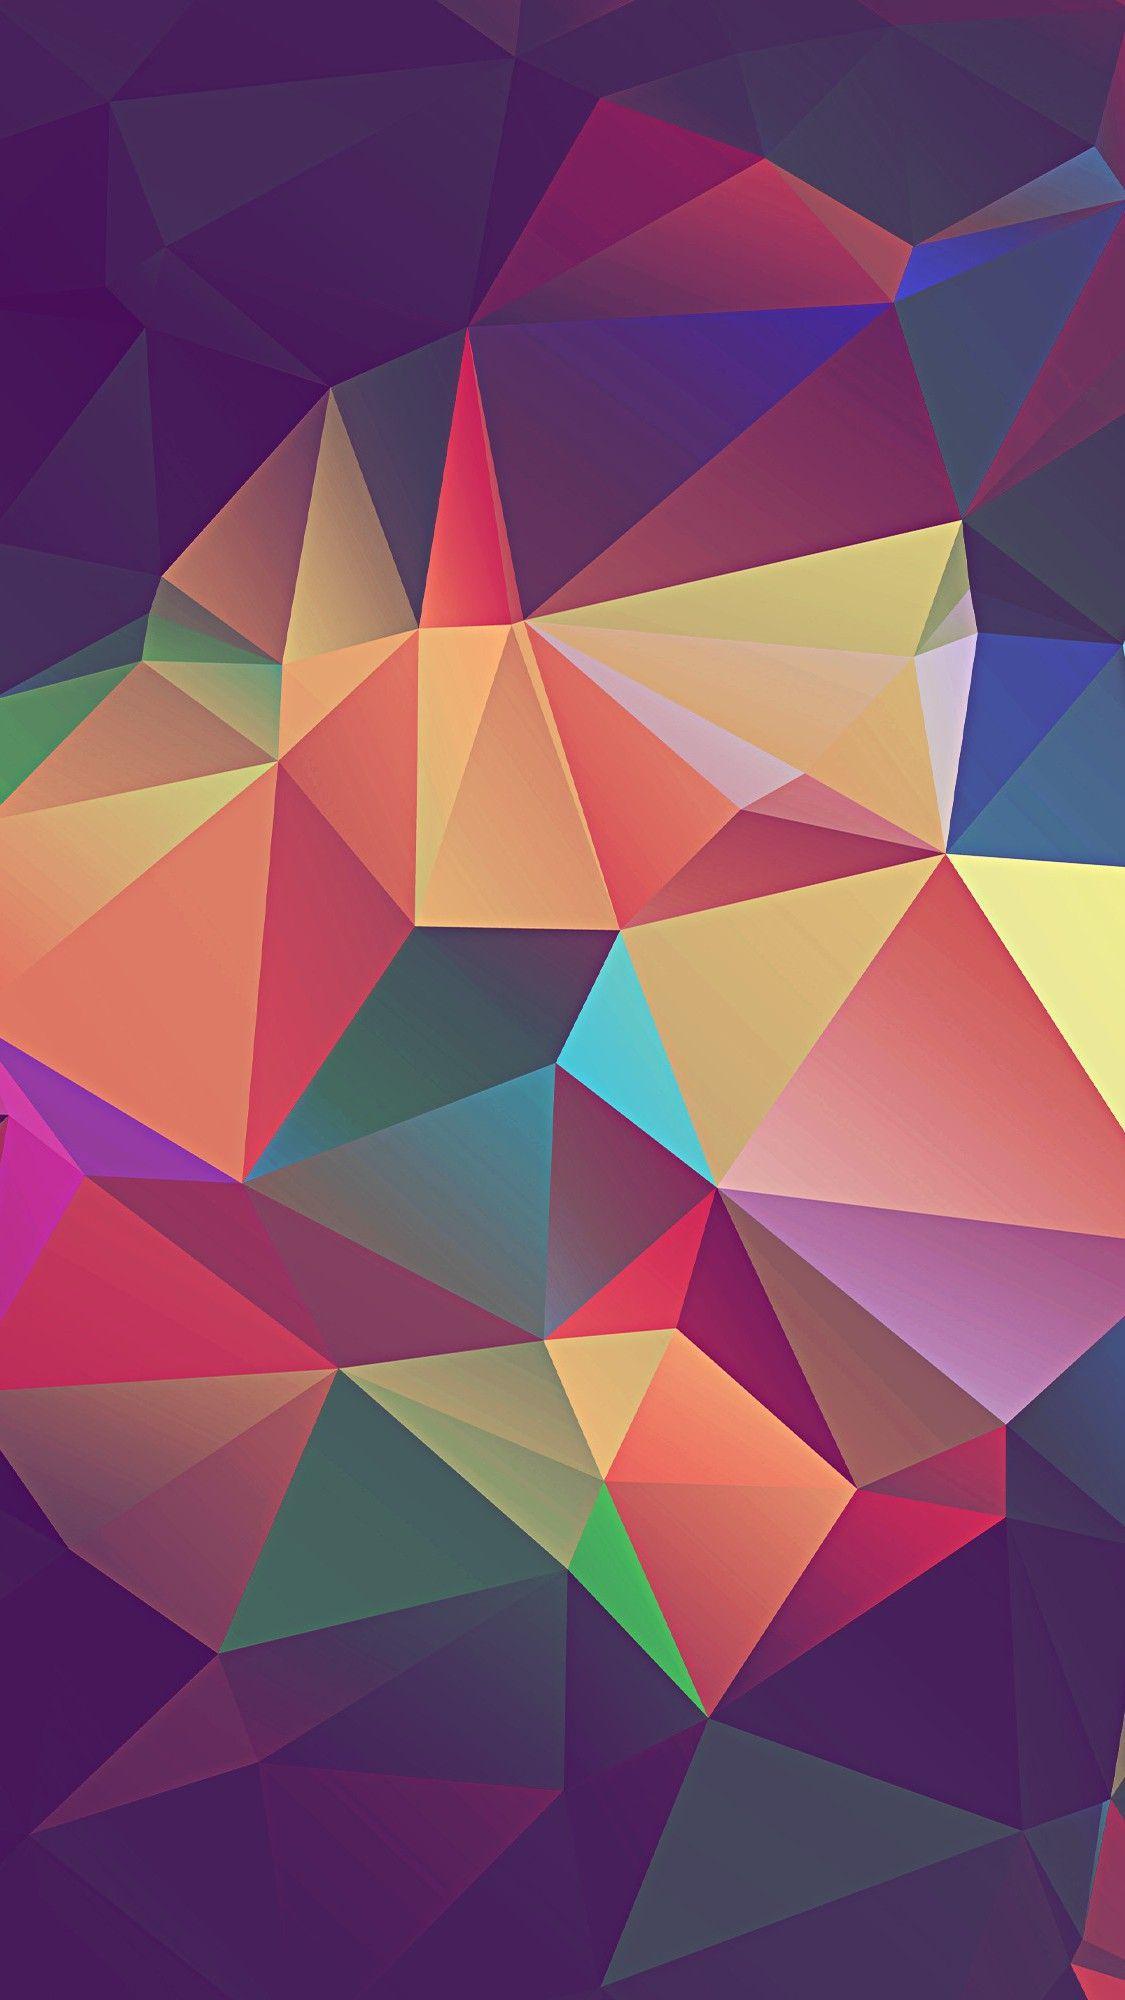 Random Triangle Wallpapers - Top Free Random Triangle Backgrounds ...